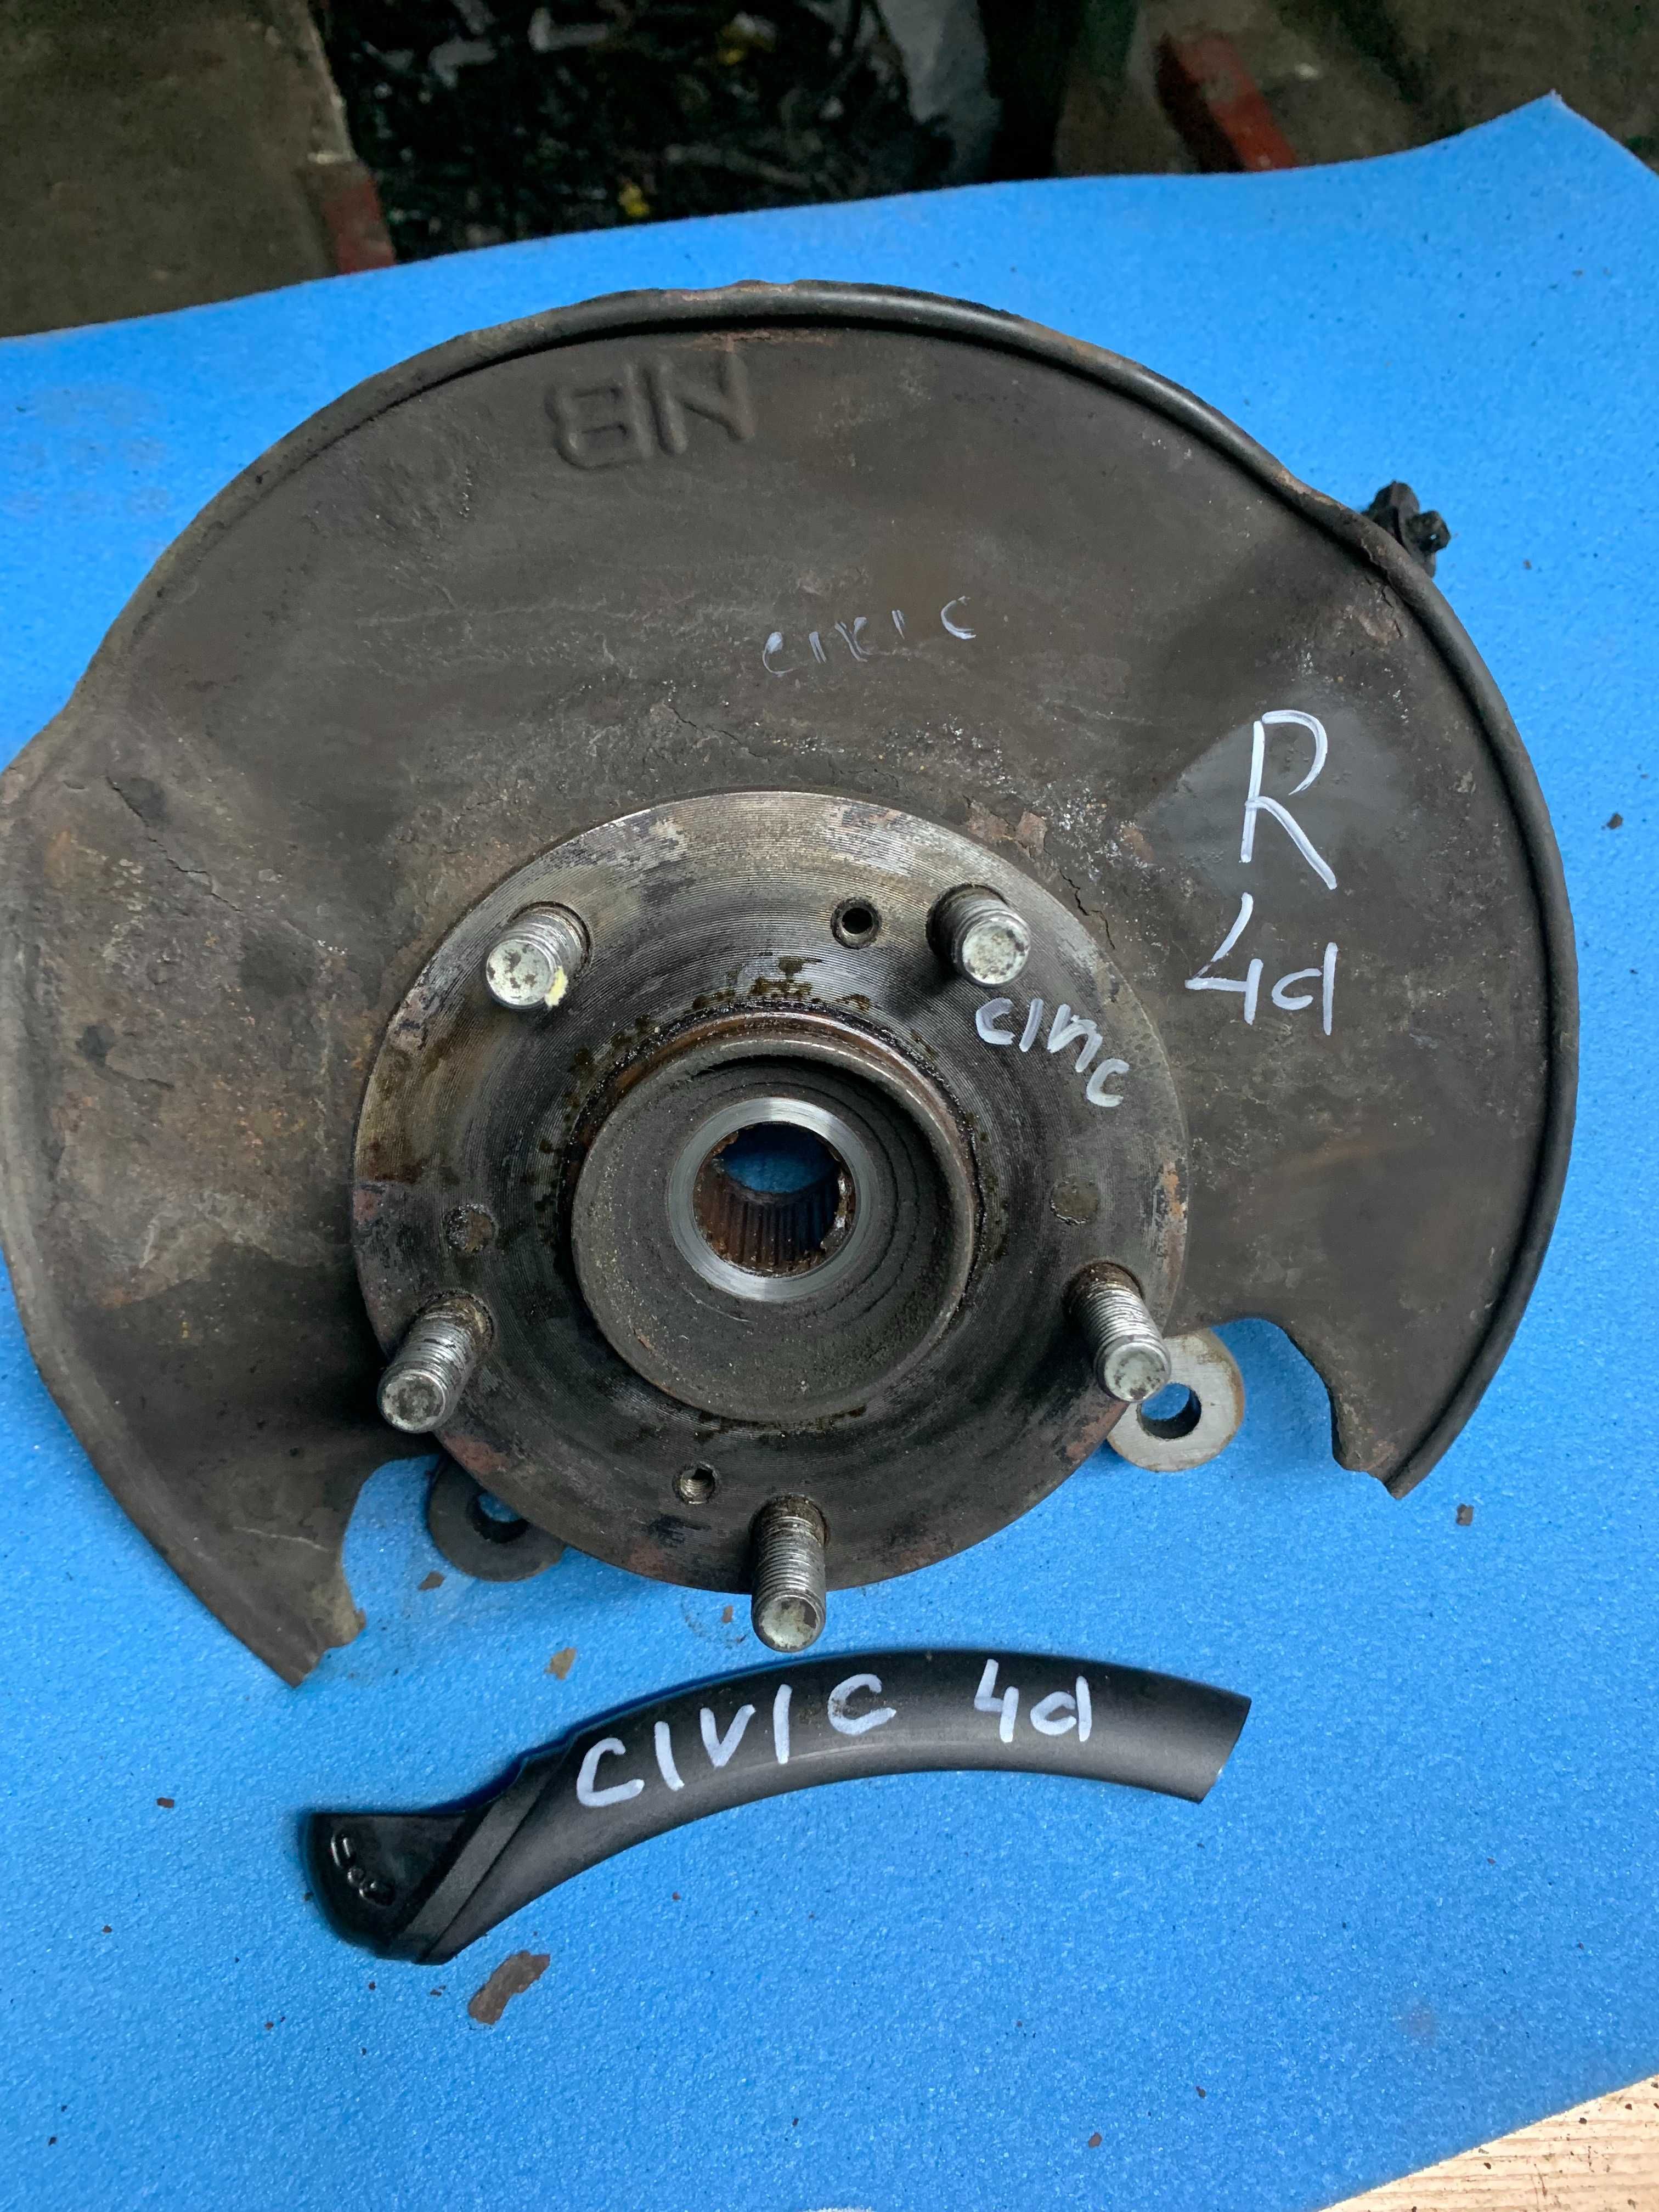 Разборка HONDA CIVIC 4D 06-11  мотор коробка дверь полуось   диски